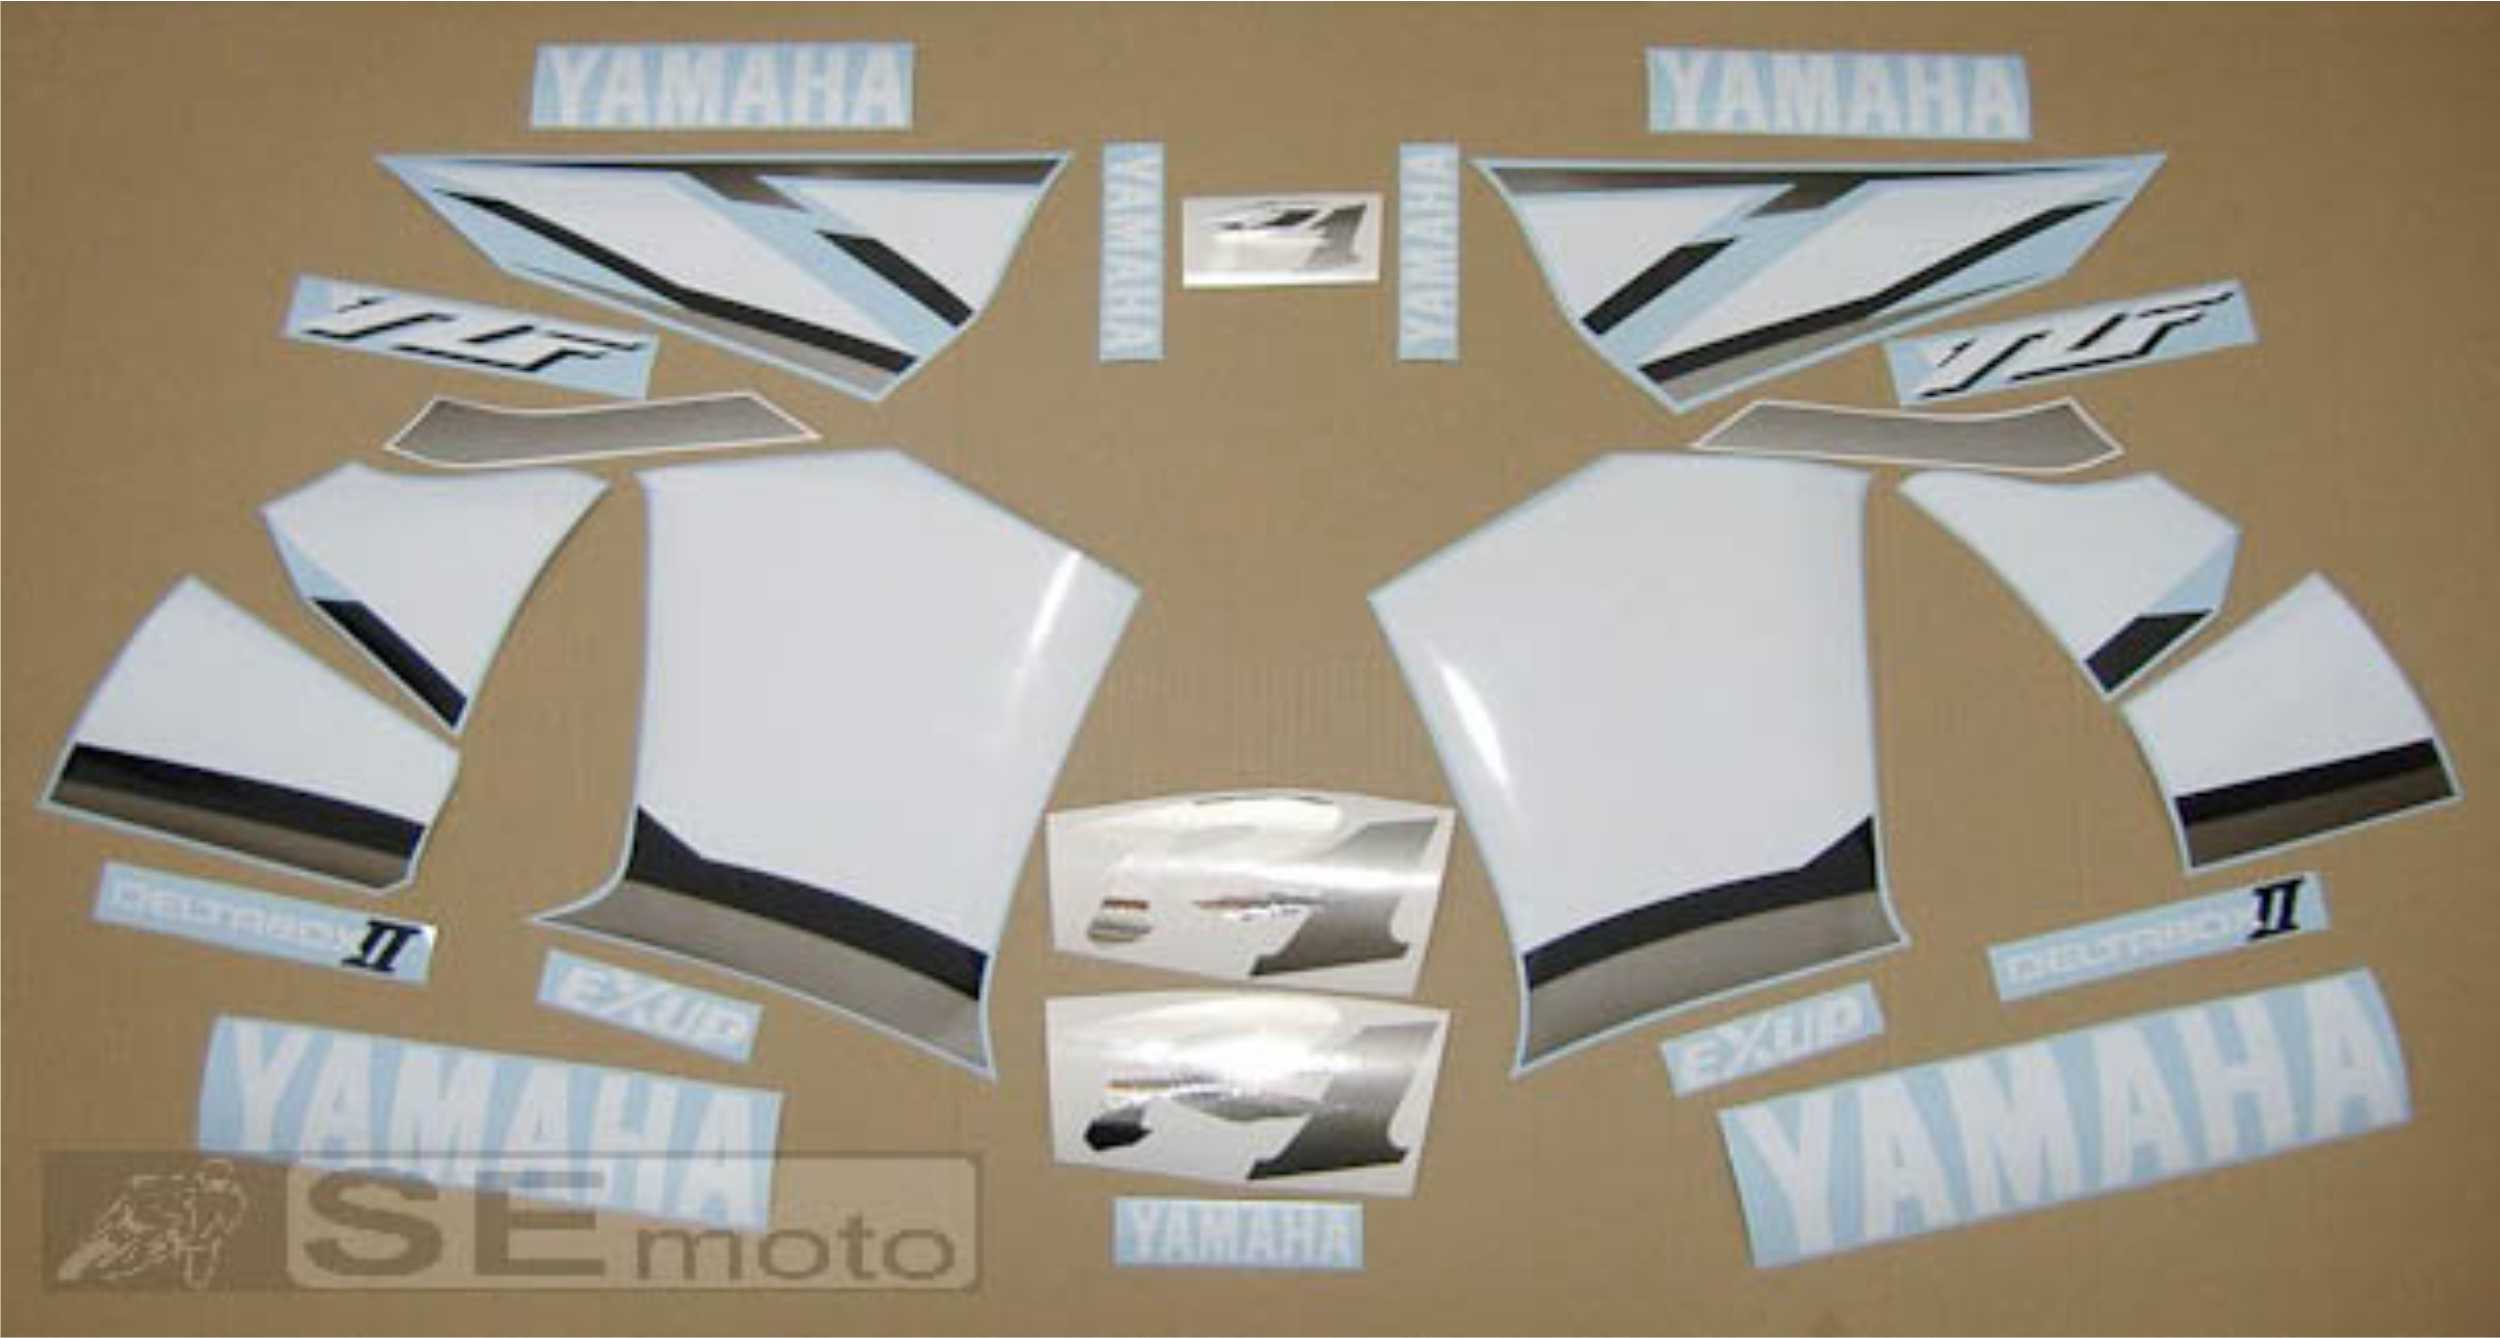 Yamaha YZF-R1 2001 красный- фото2